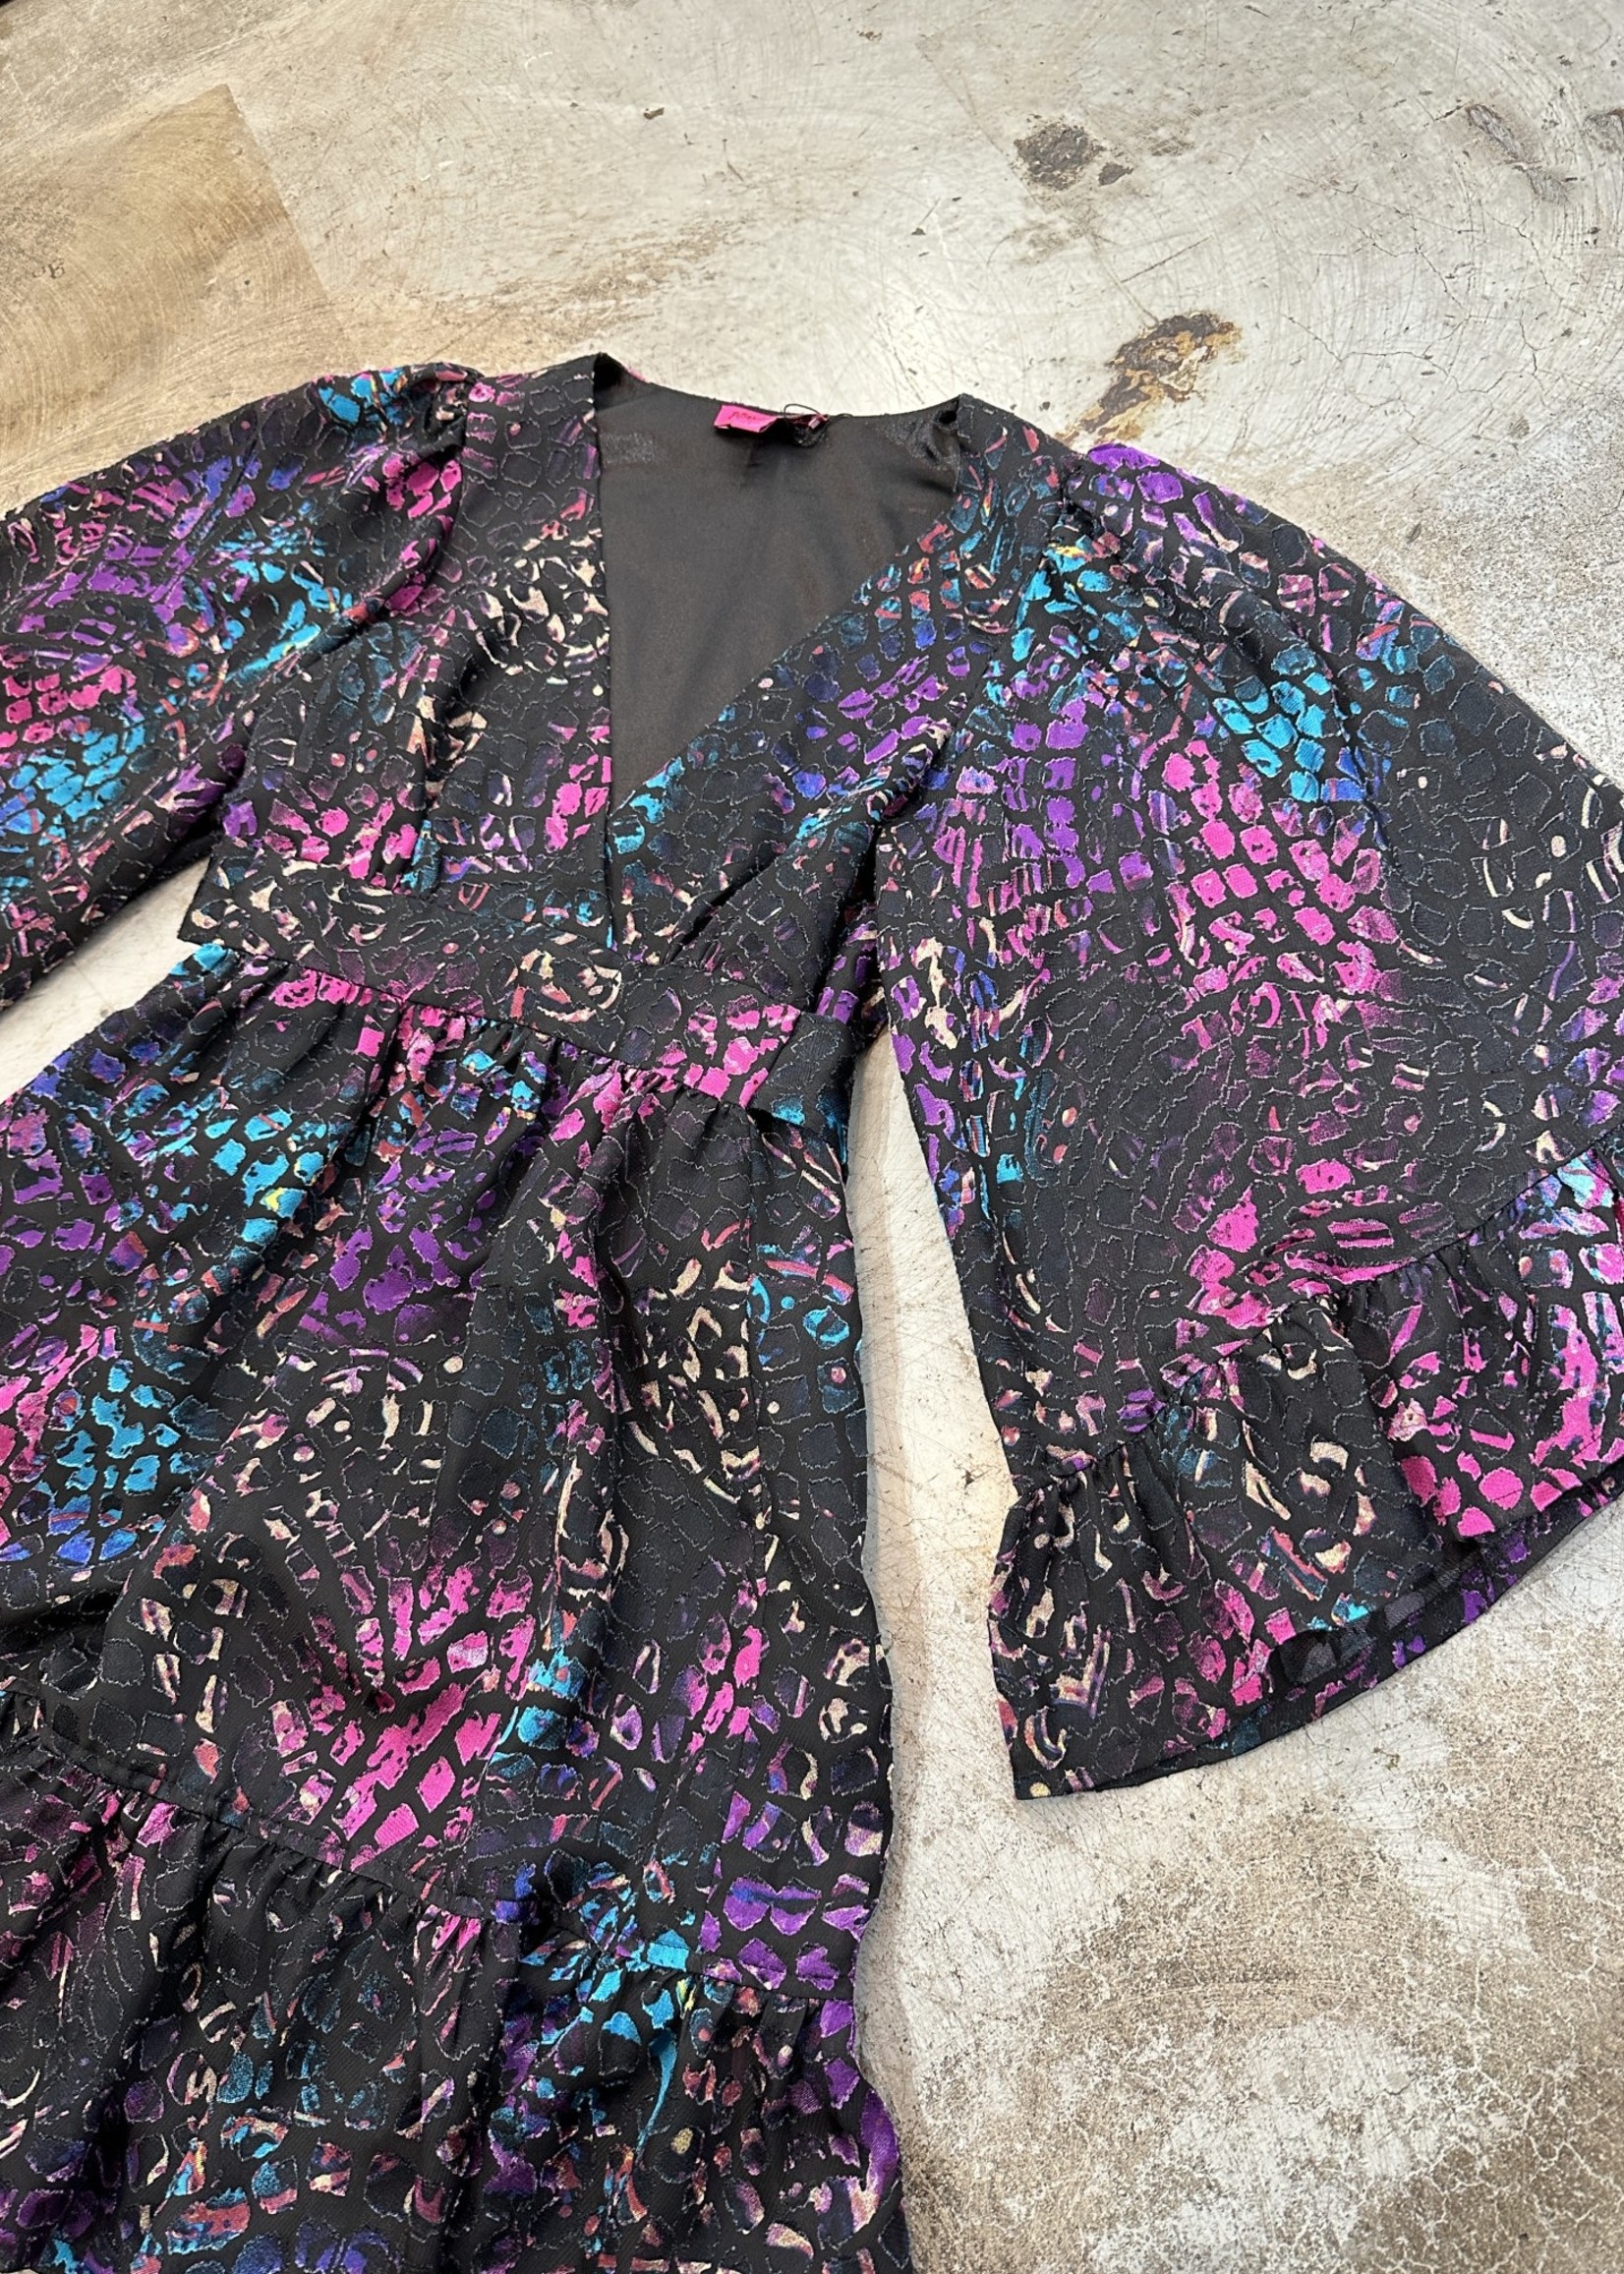 Betsey Johnson Multi Color Cheetah Print Dress S